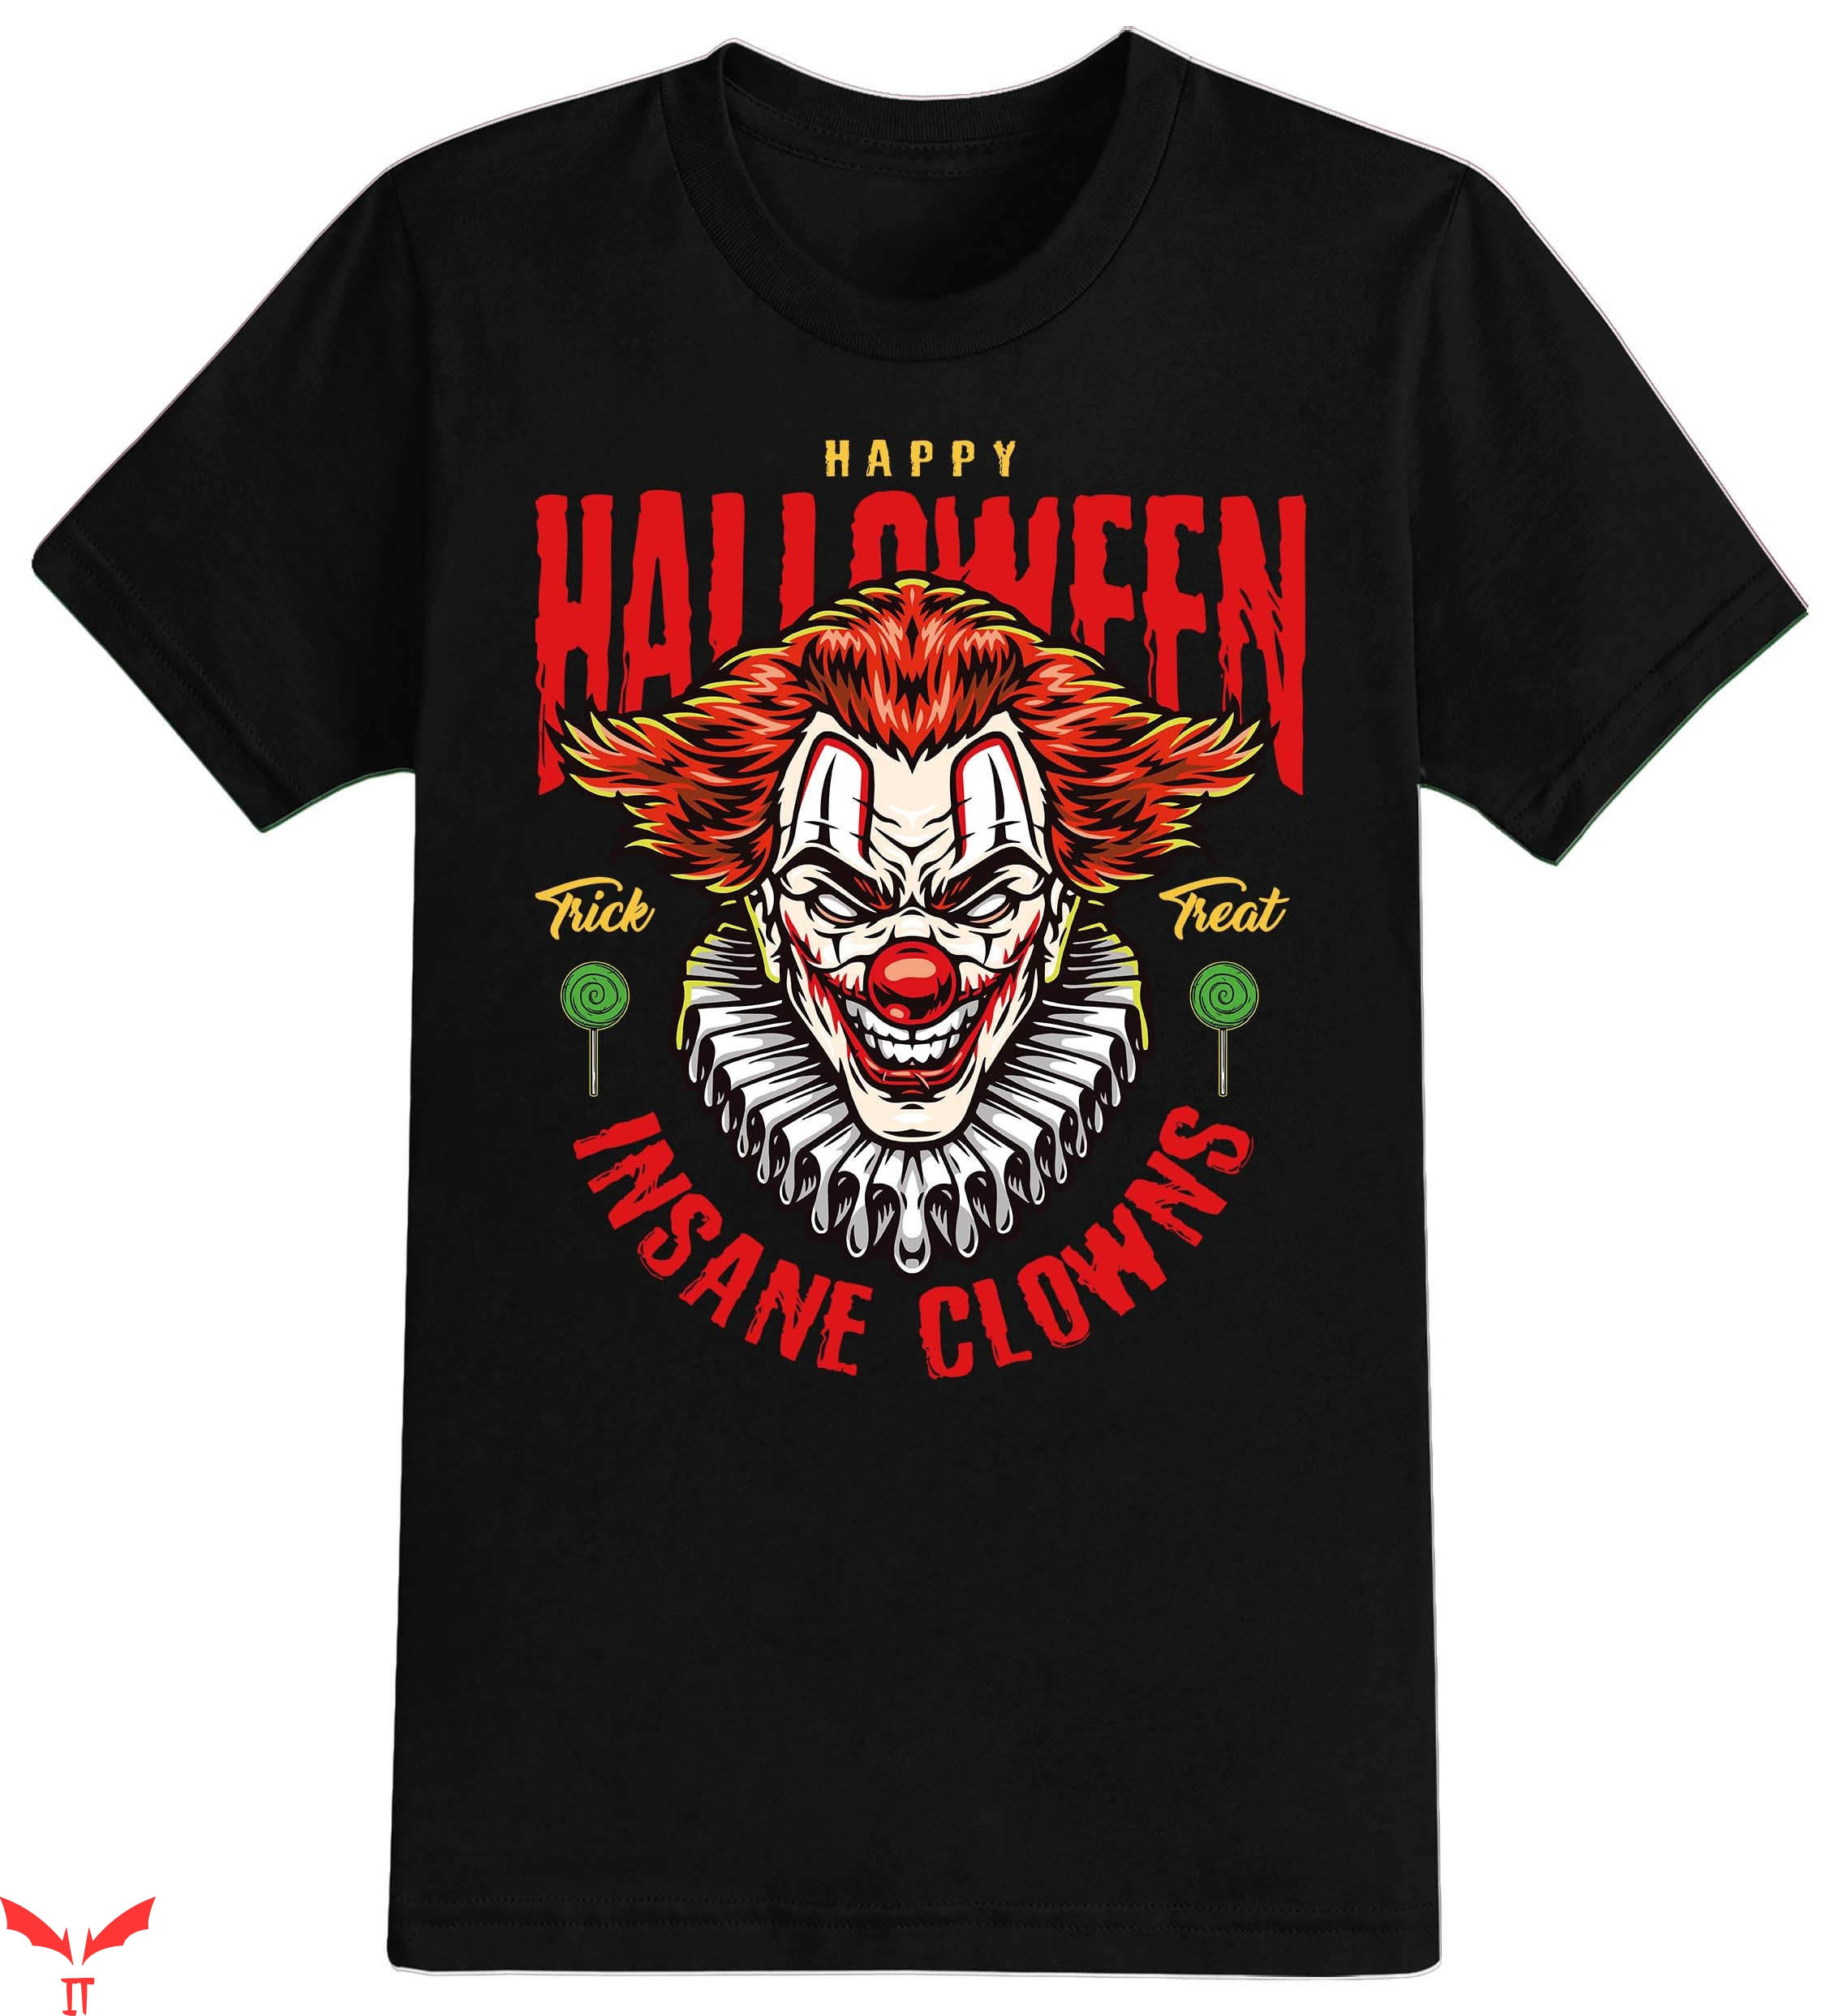 IT The Clown T-Shirt Happy Halloween Insane Clowns